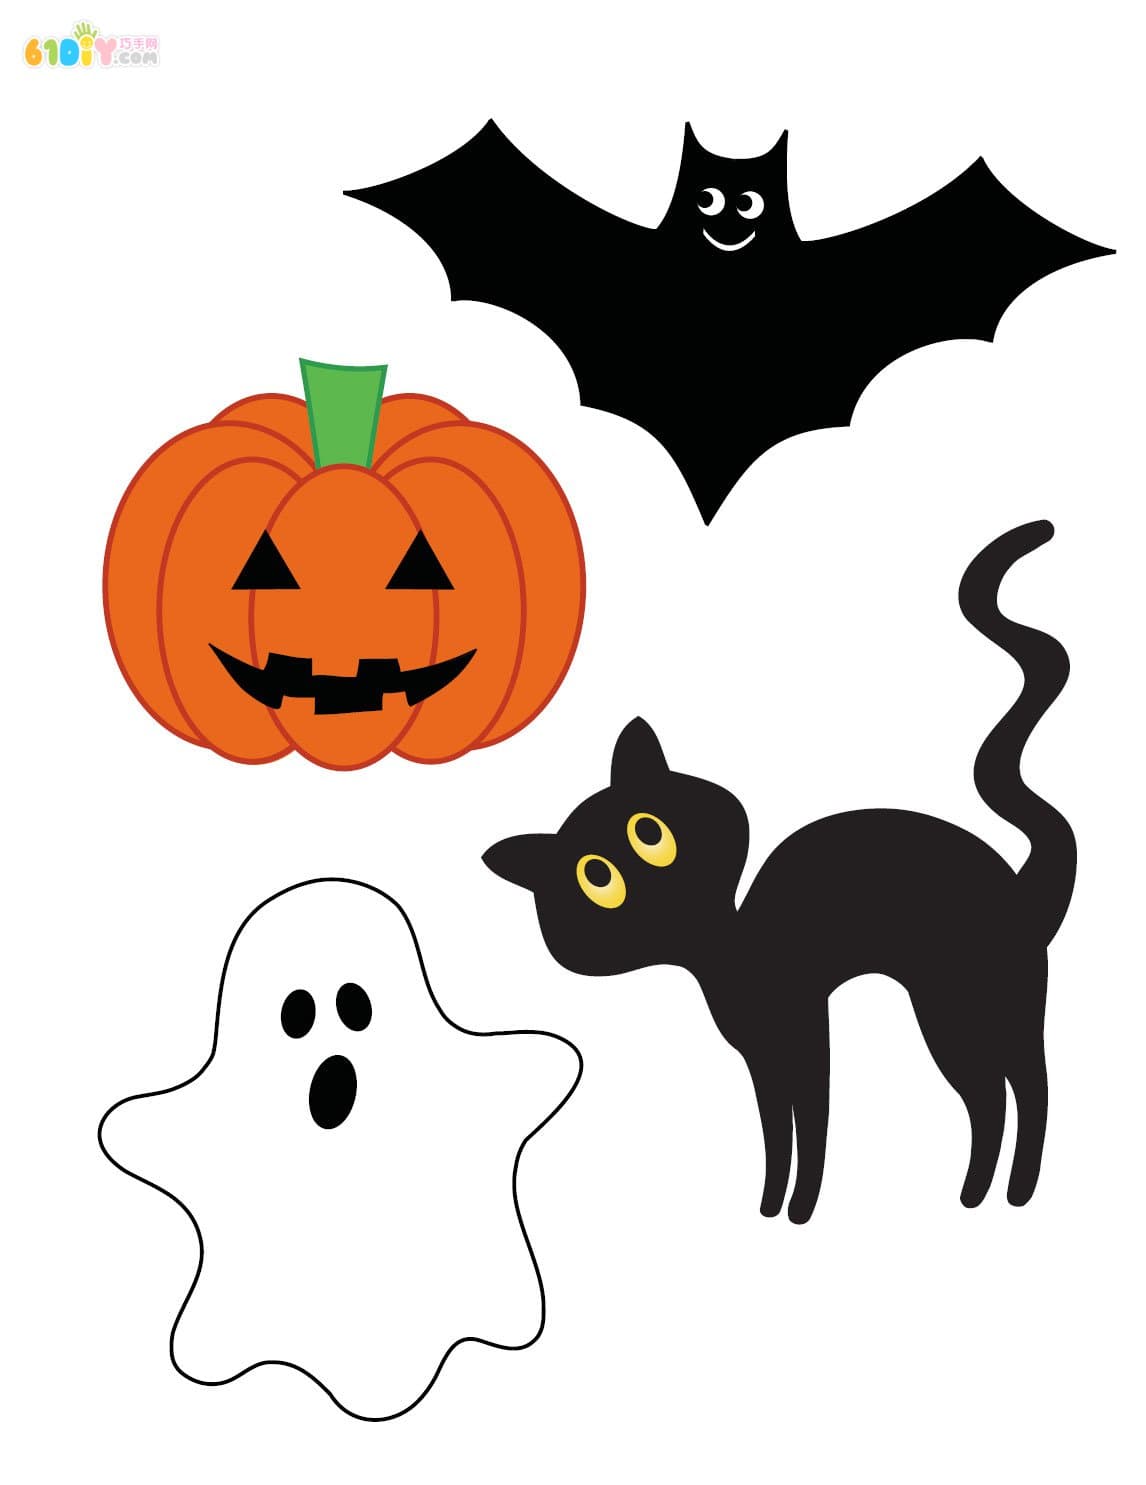 Halloween decorative element template download